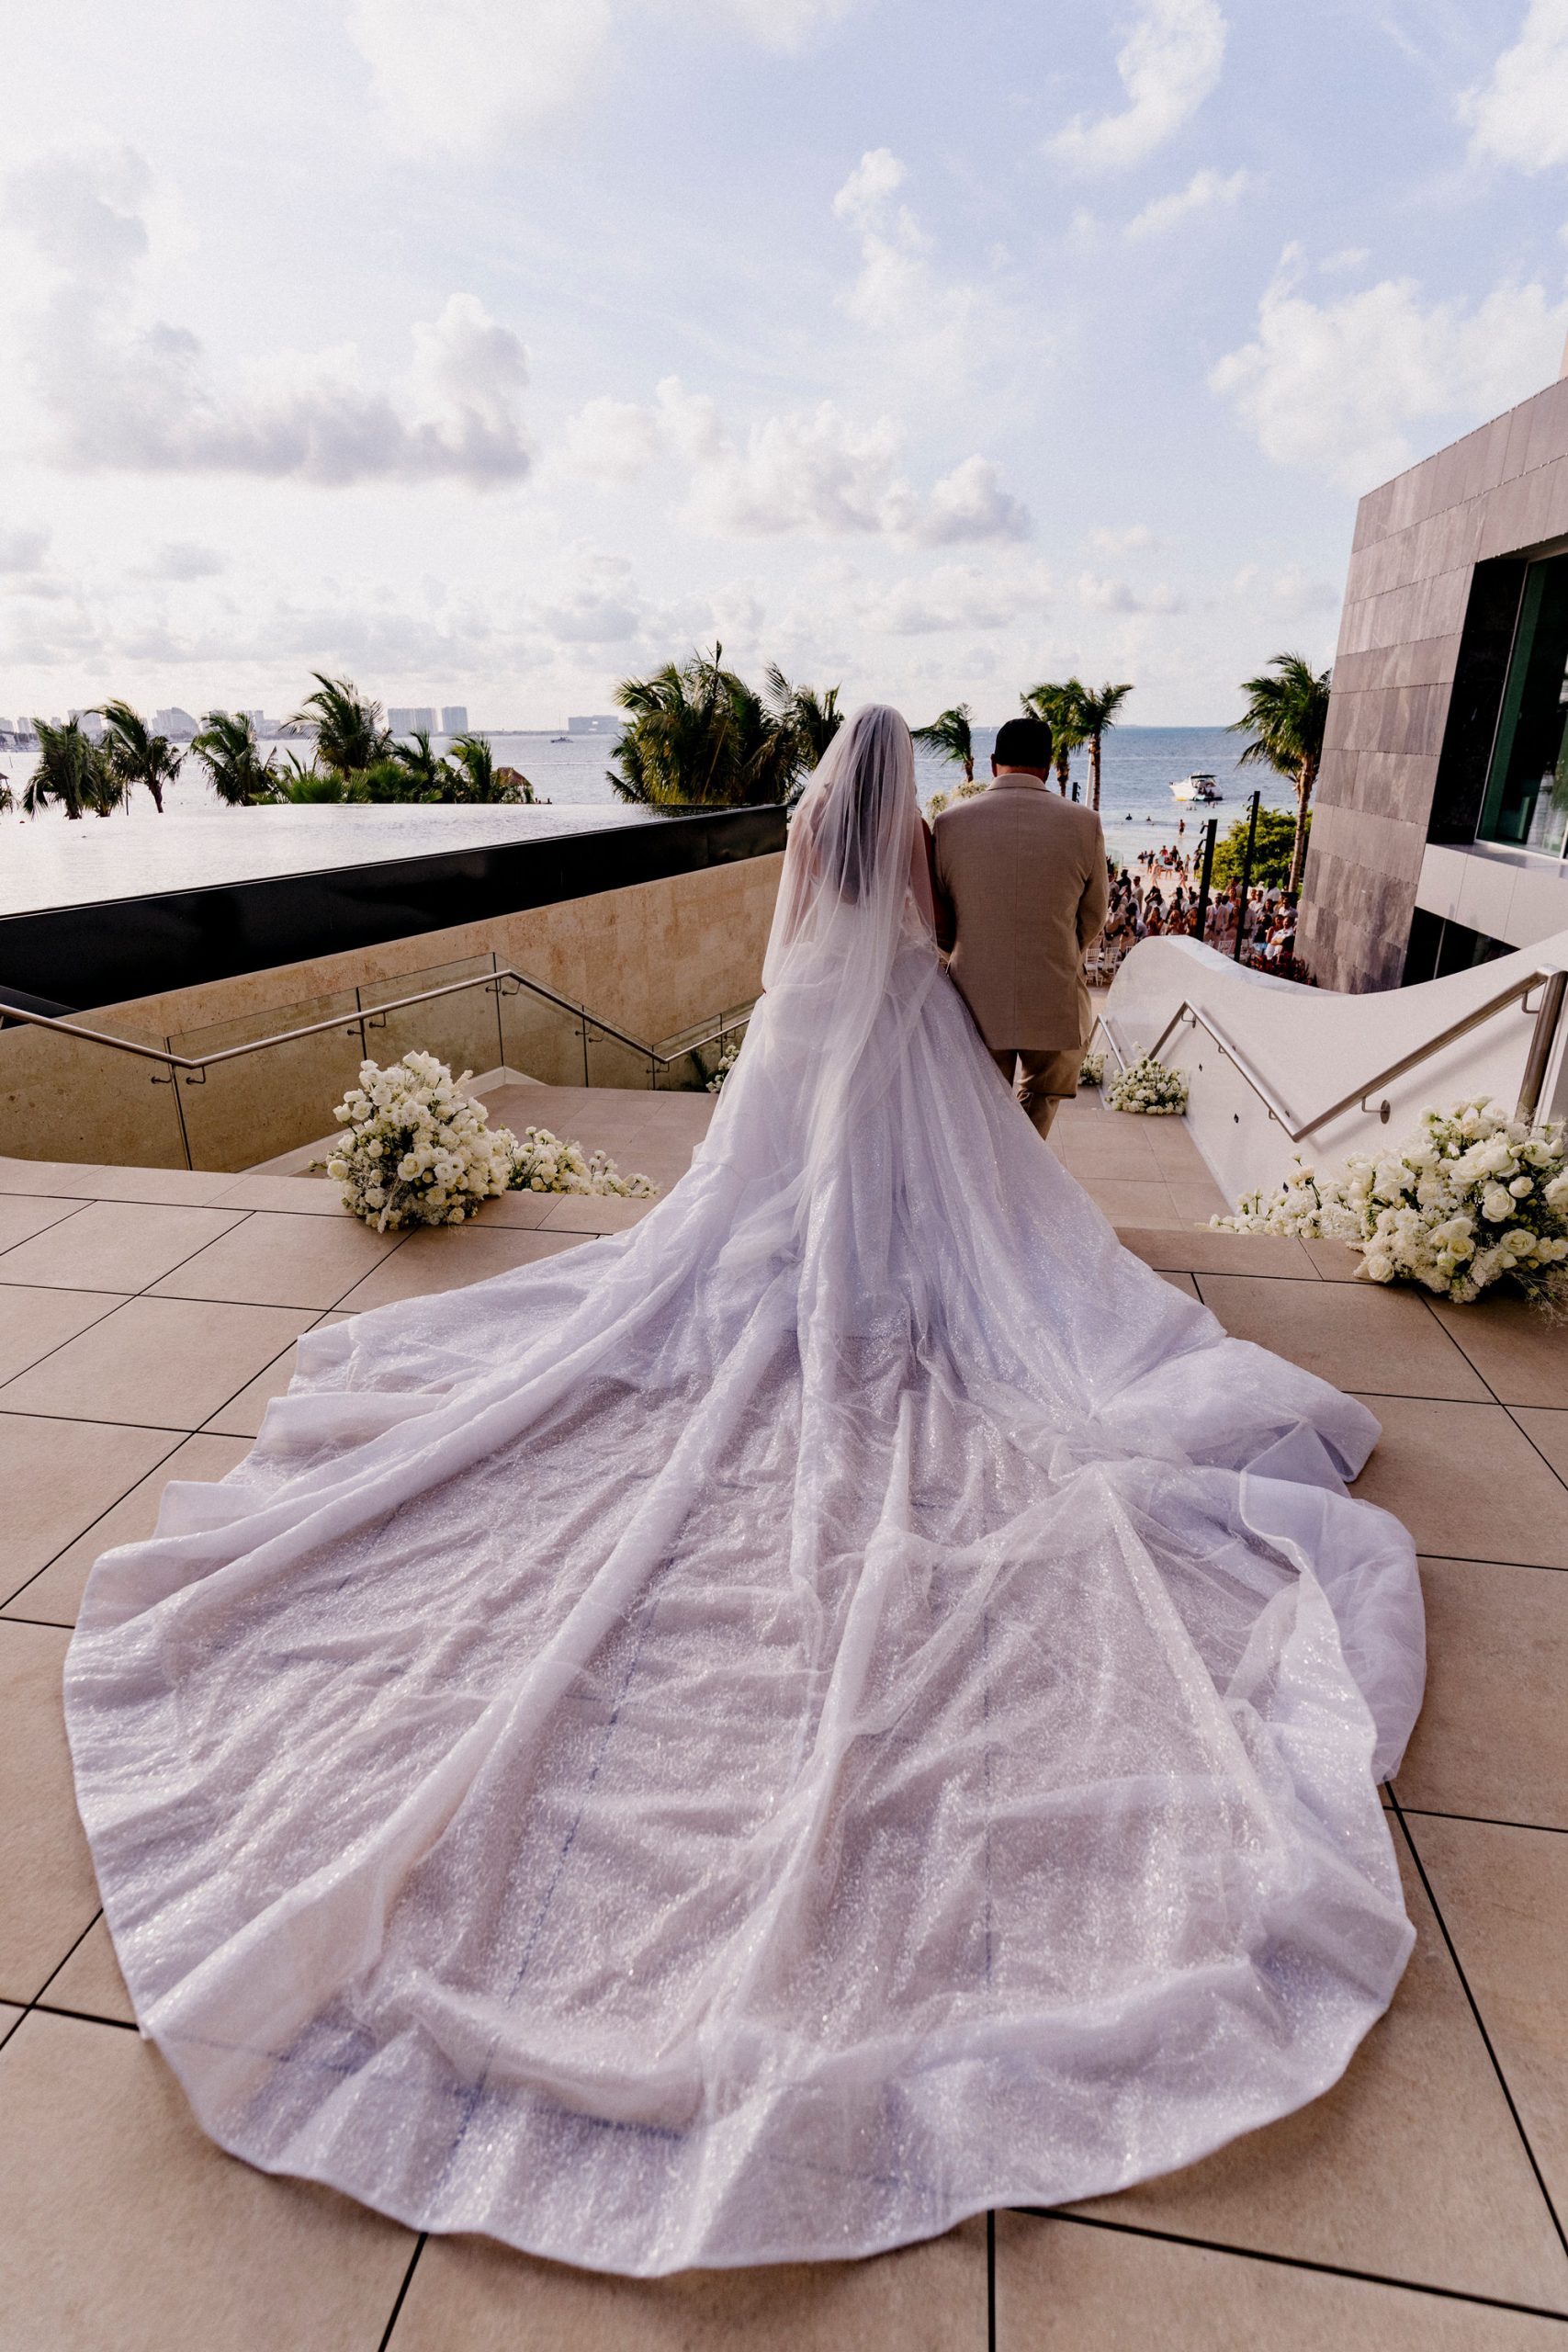 cancun-mexico-destination-wedding-brethless-resort-brianna-jj-127